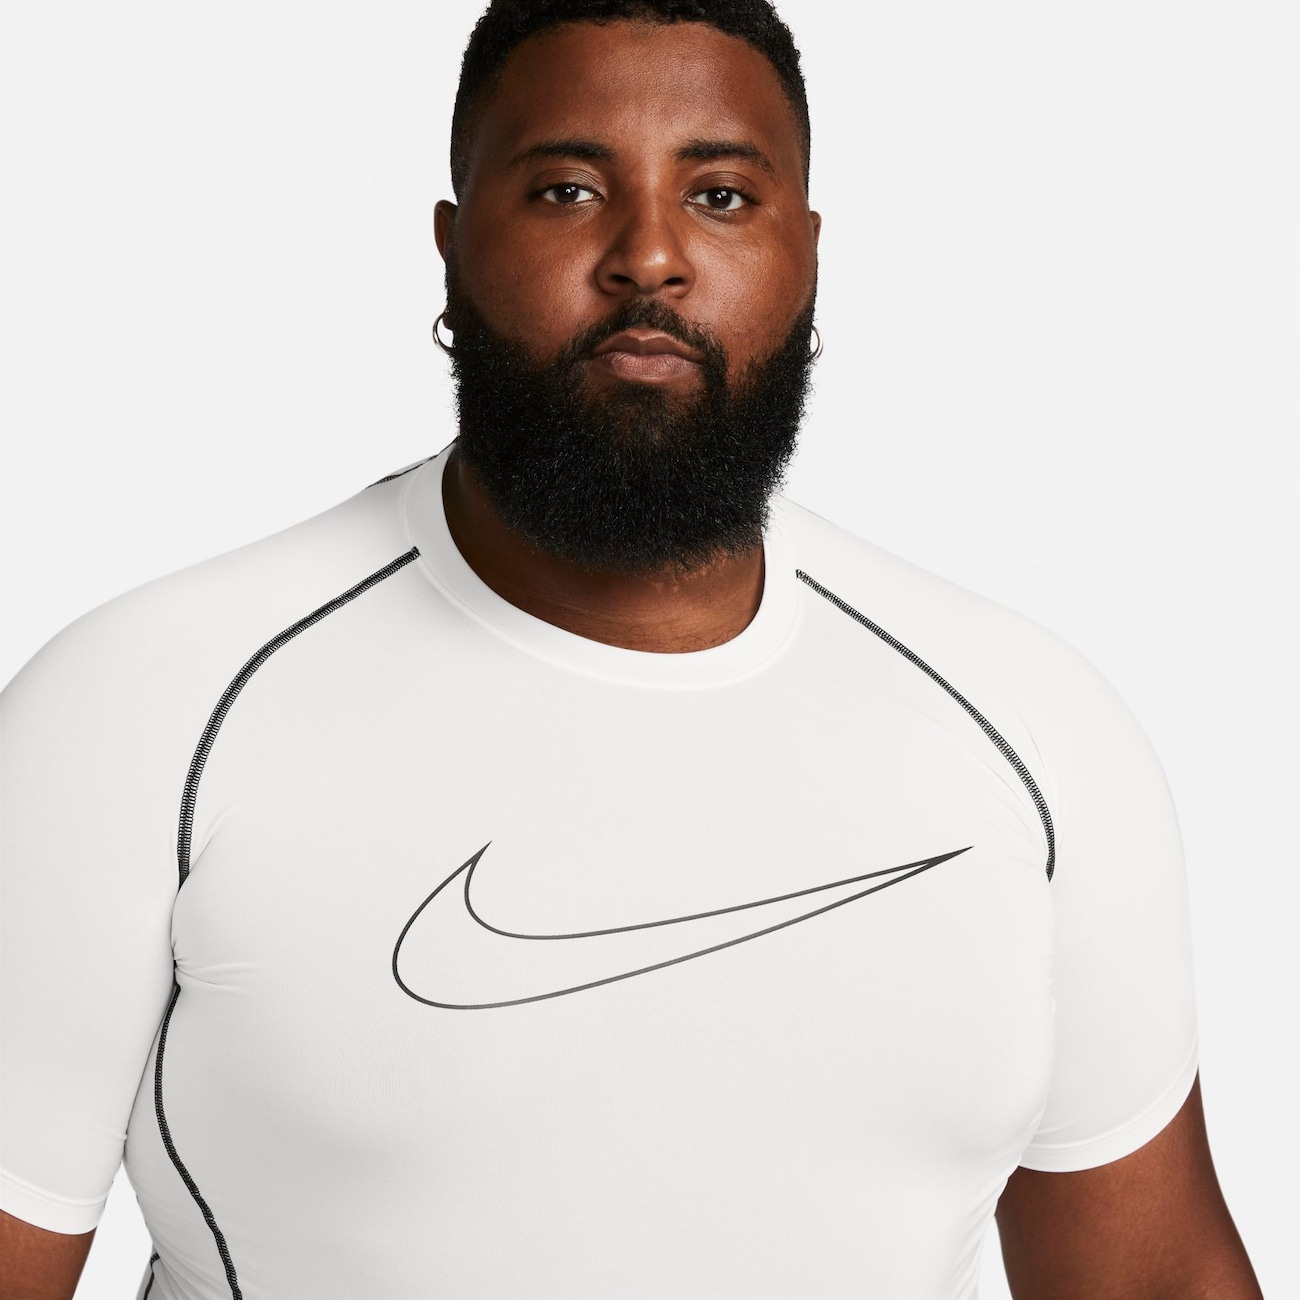 Camiseta Nike Pro Dri-FIT Masculina - Branco